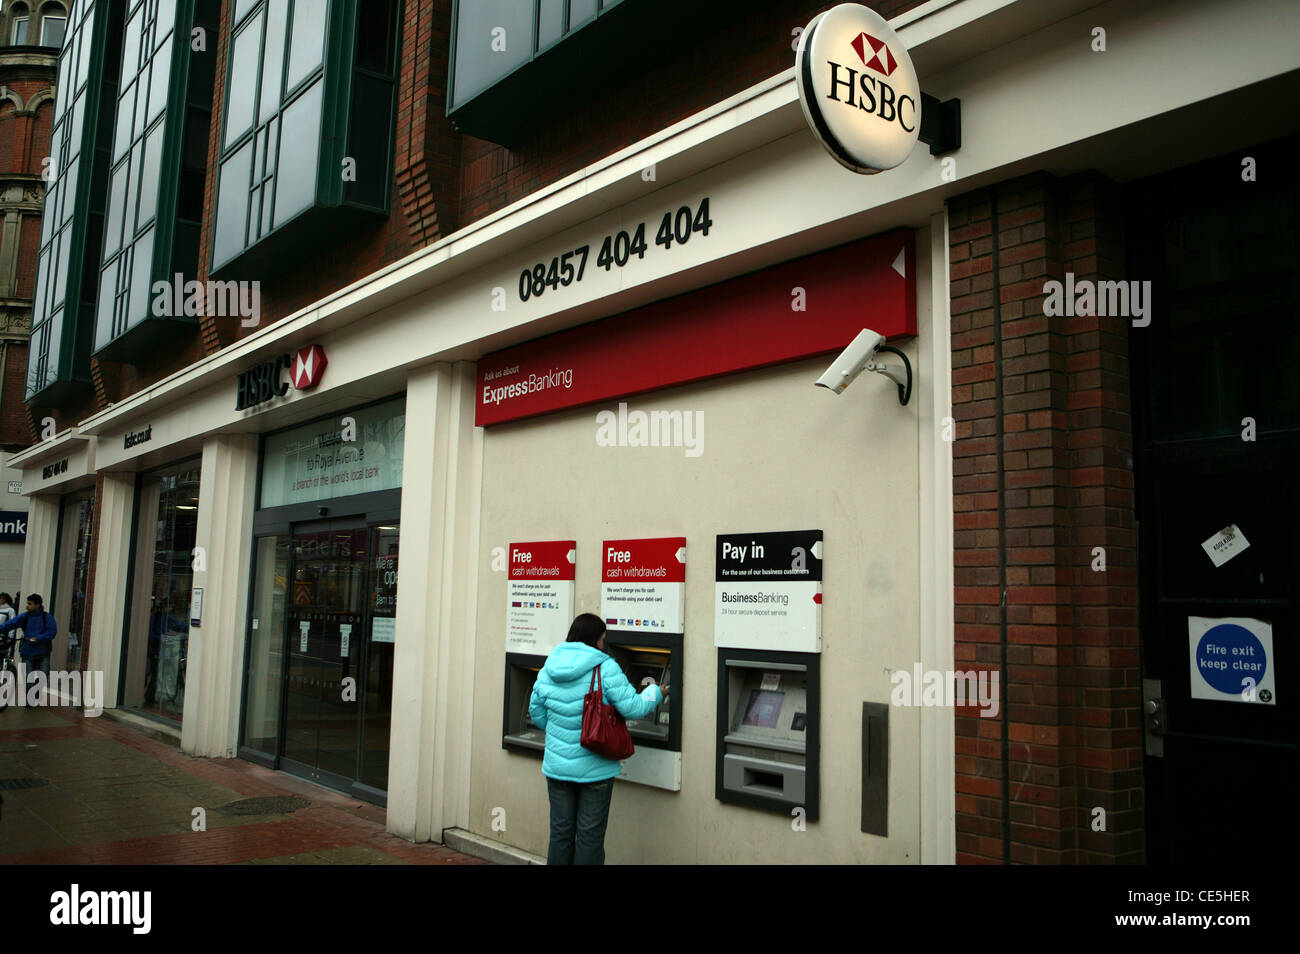 HSBC Bank Frontage, Royal Avenue rosso , Bianco & Nero logo, un Business Banking ATM, due normali ATM,.Persona presso ATM blue coat Foto Stock